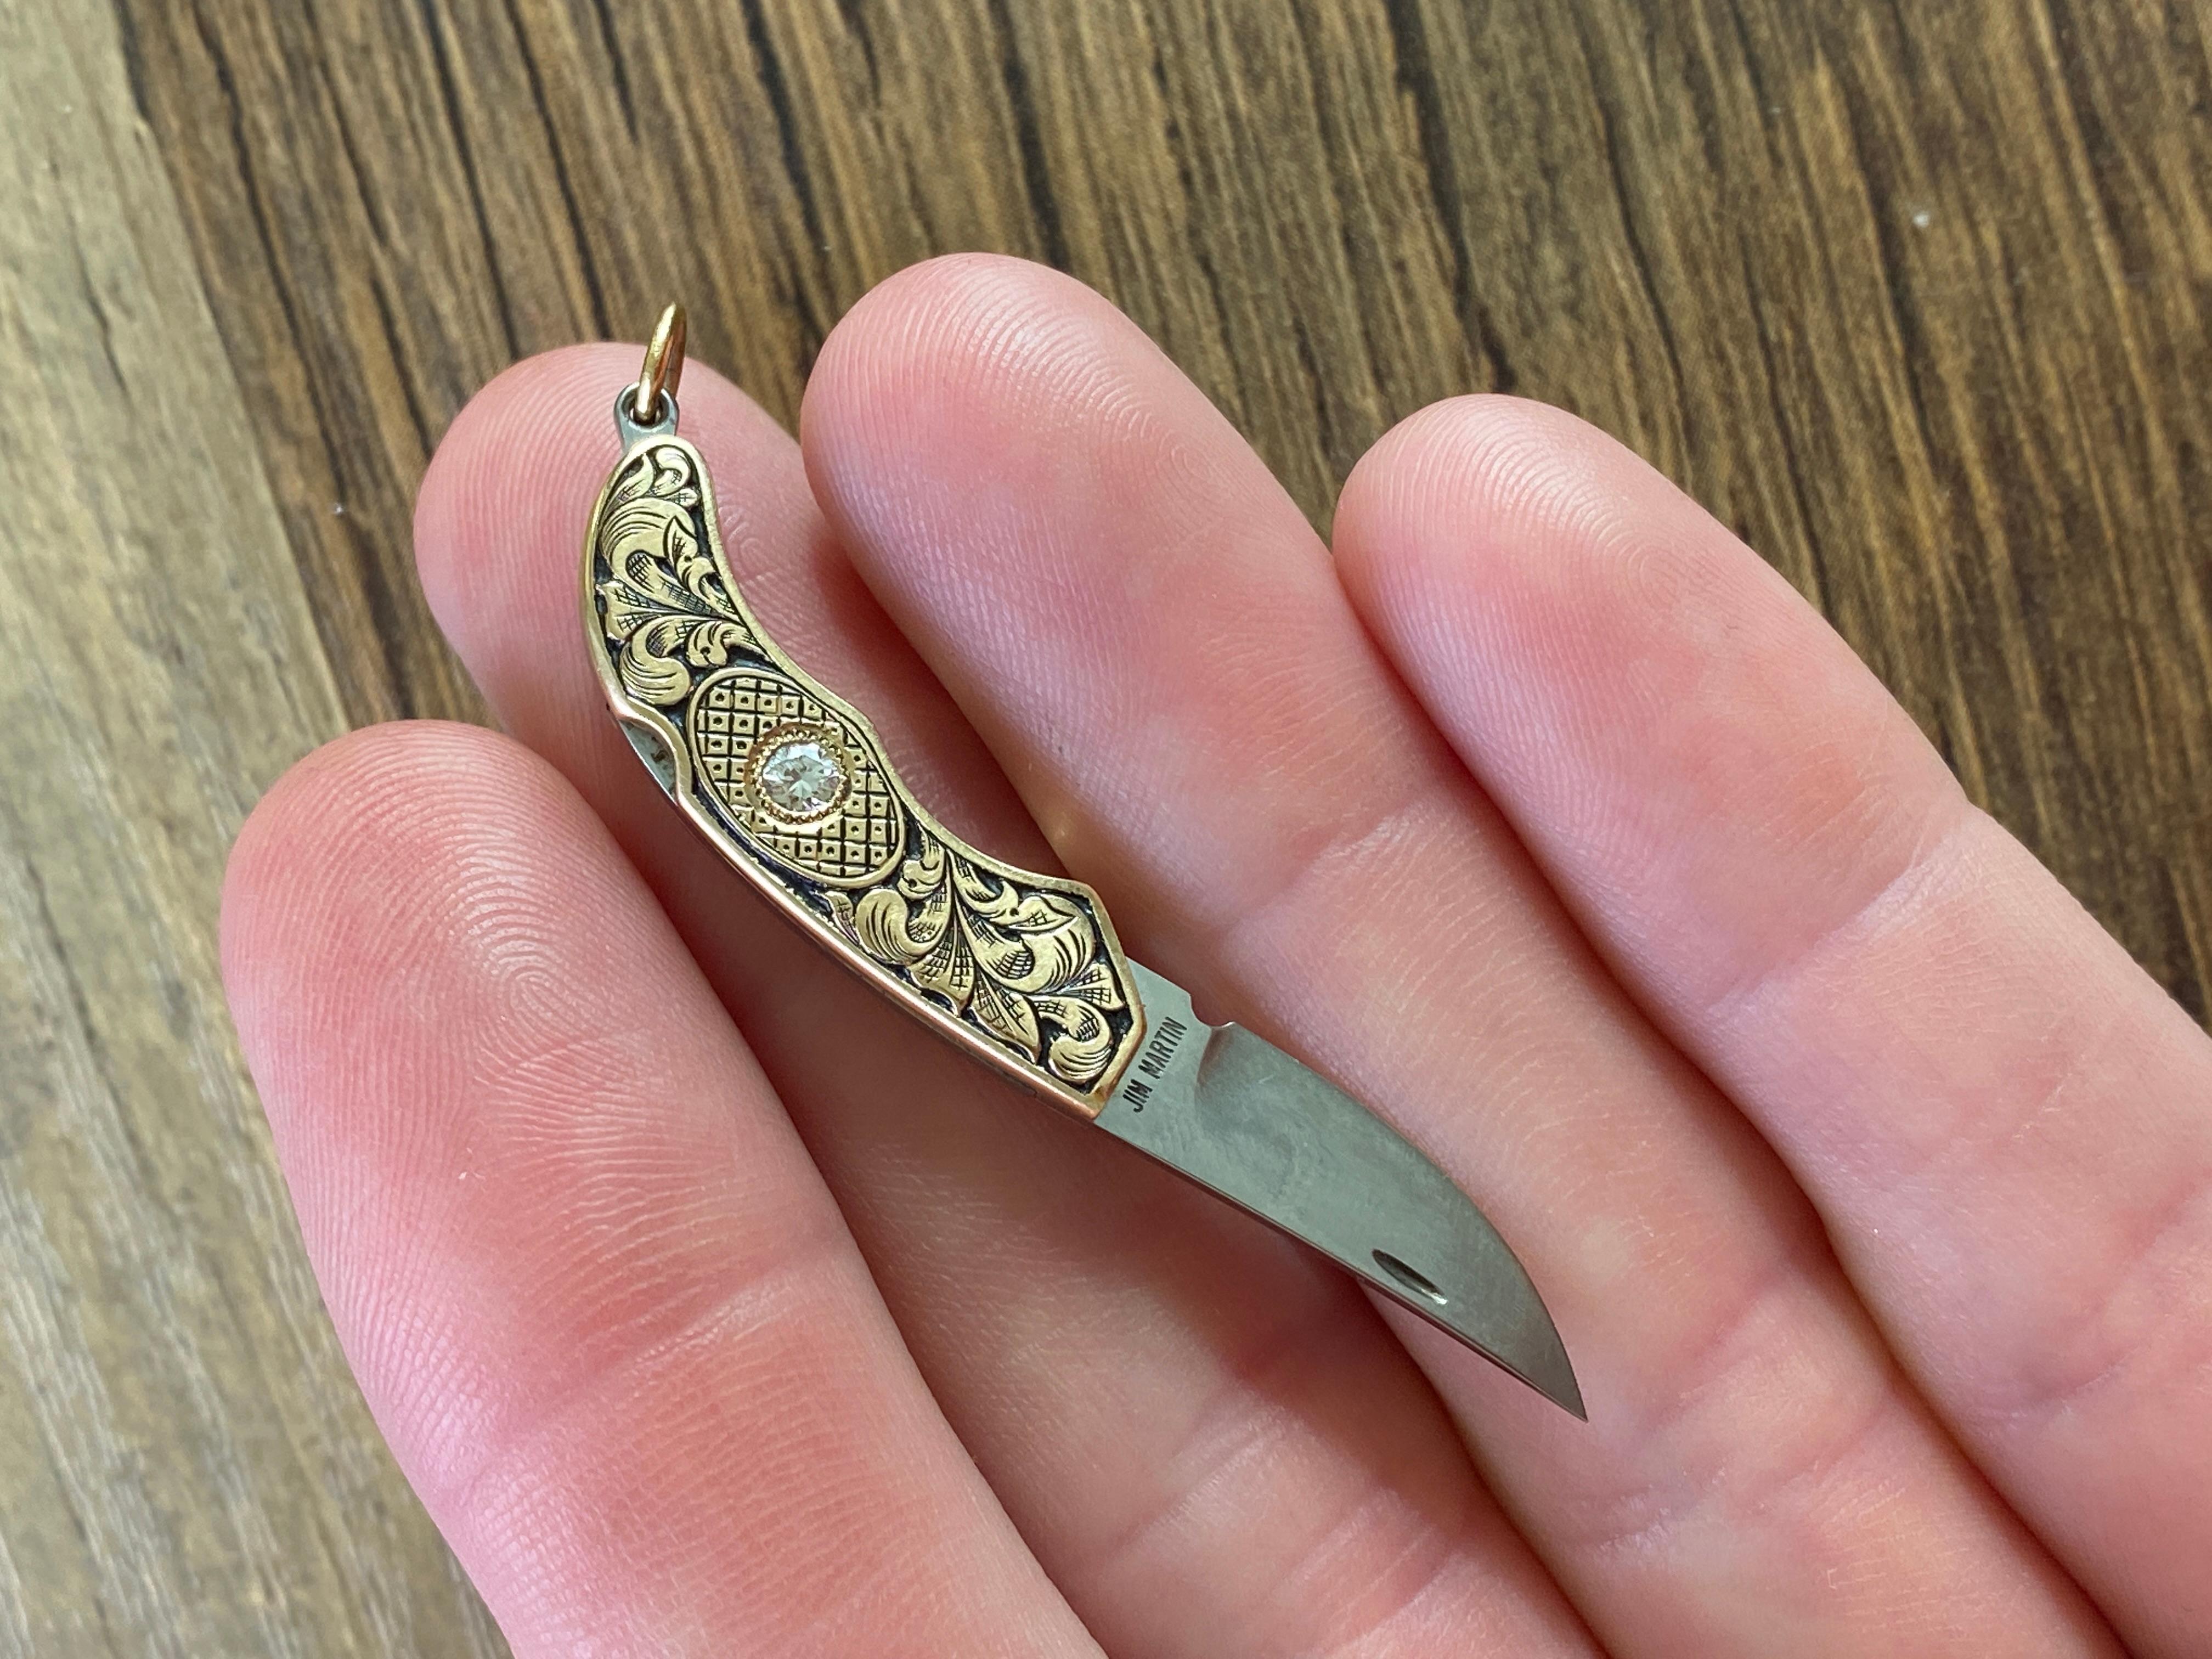 mini knife necklace